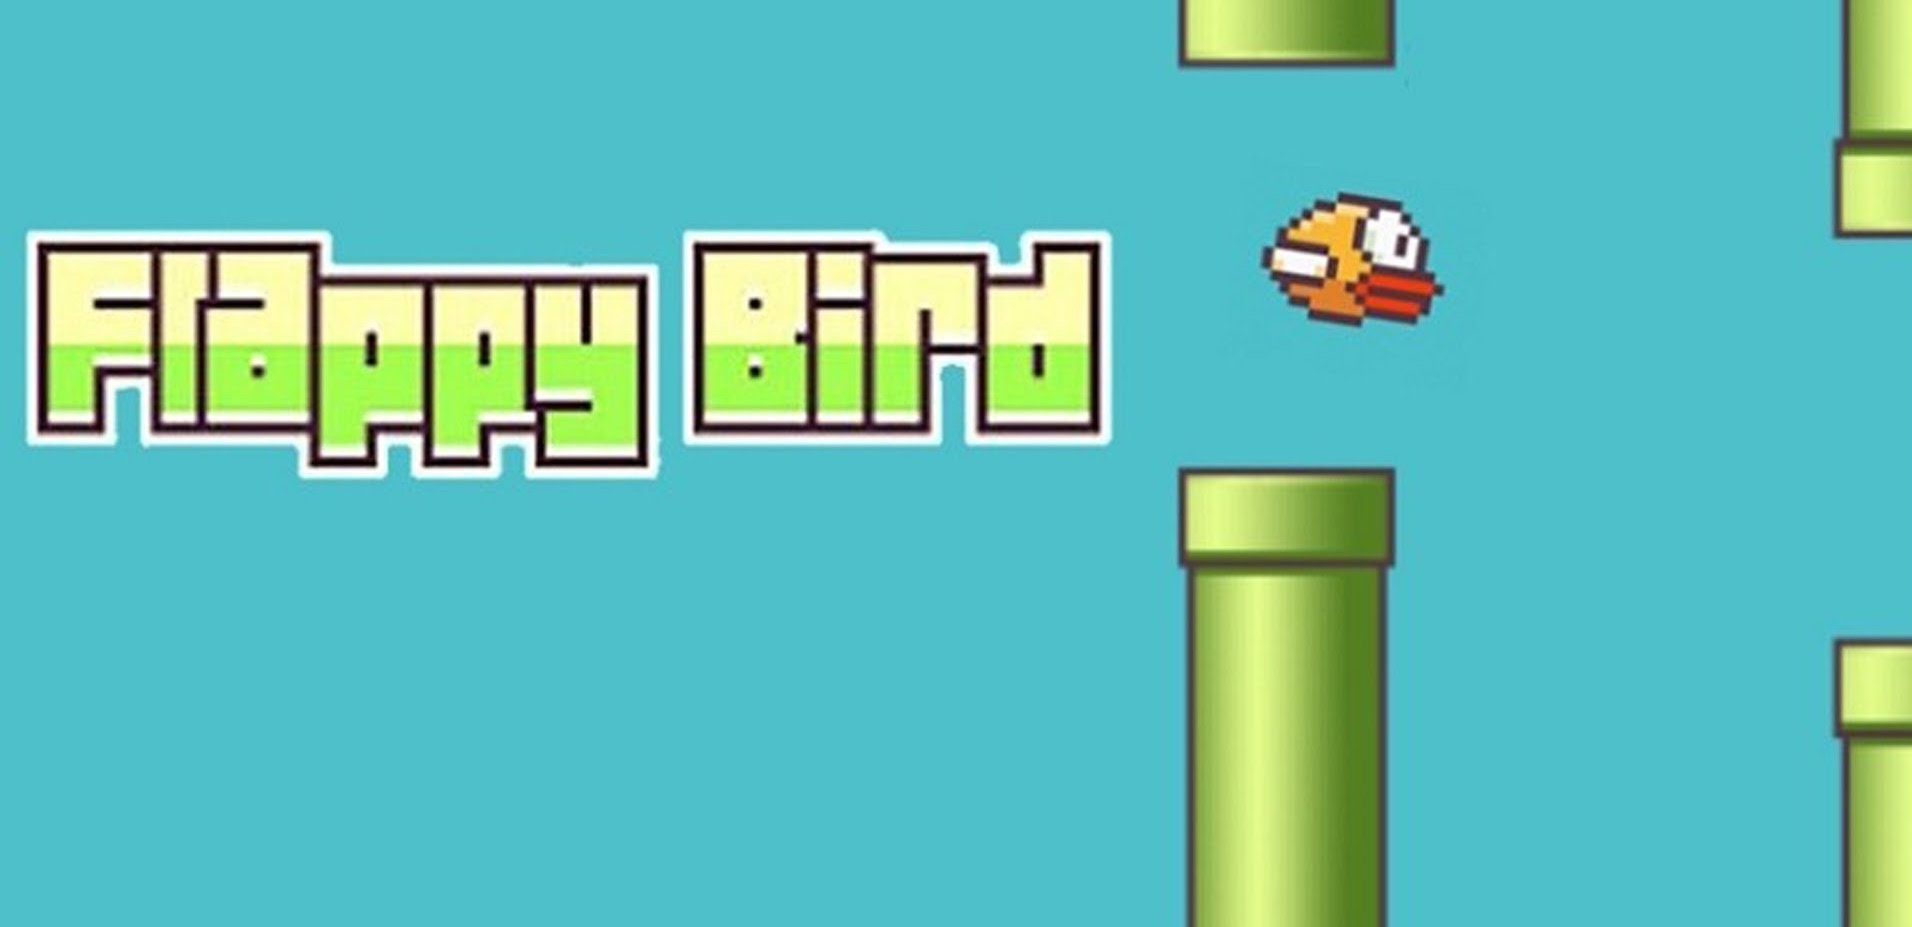 Programa tu Flappy Bird con Scratch en menos de 15 minutos Programamos